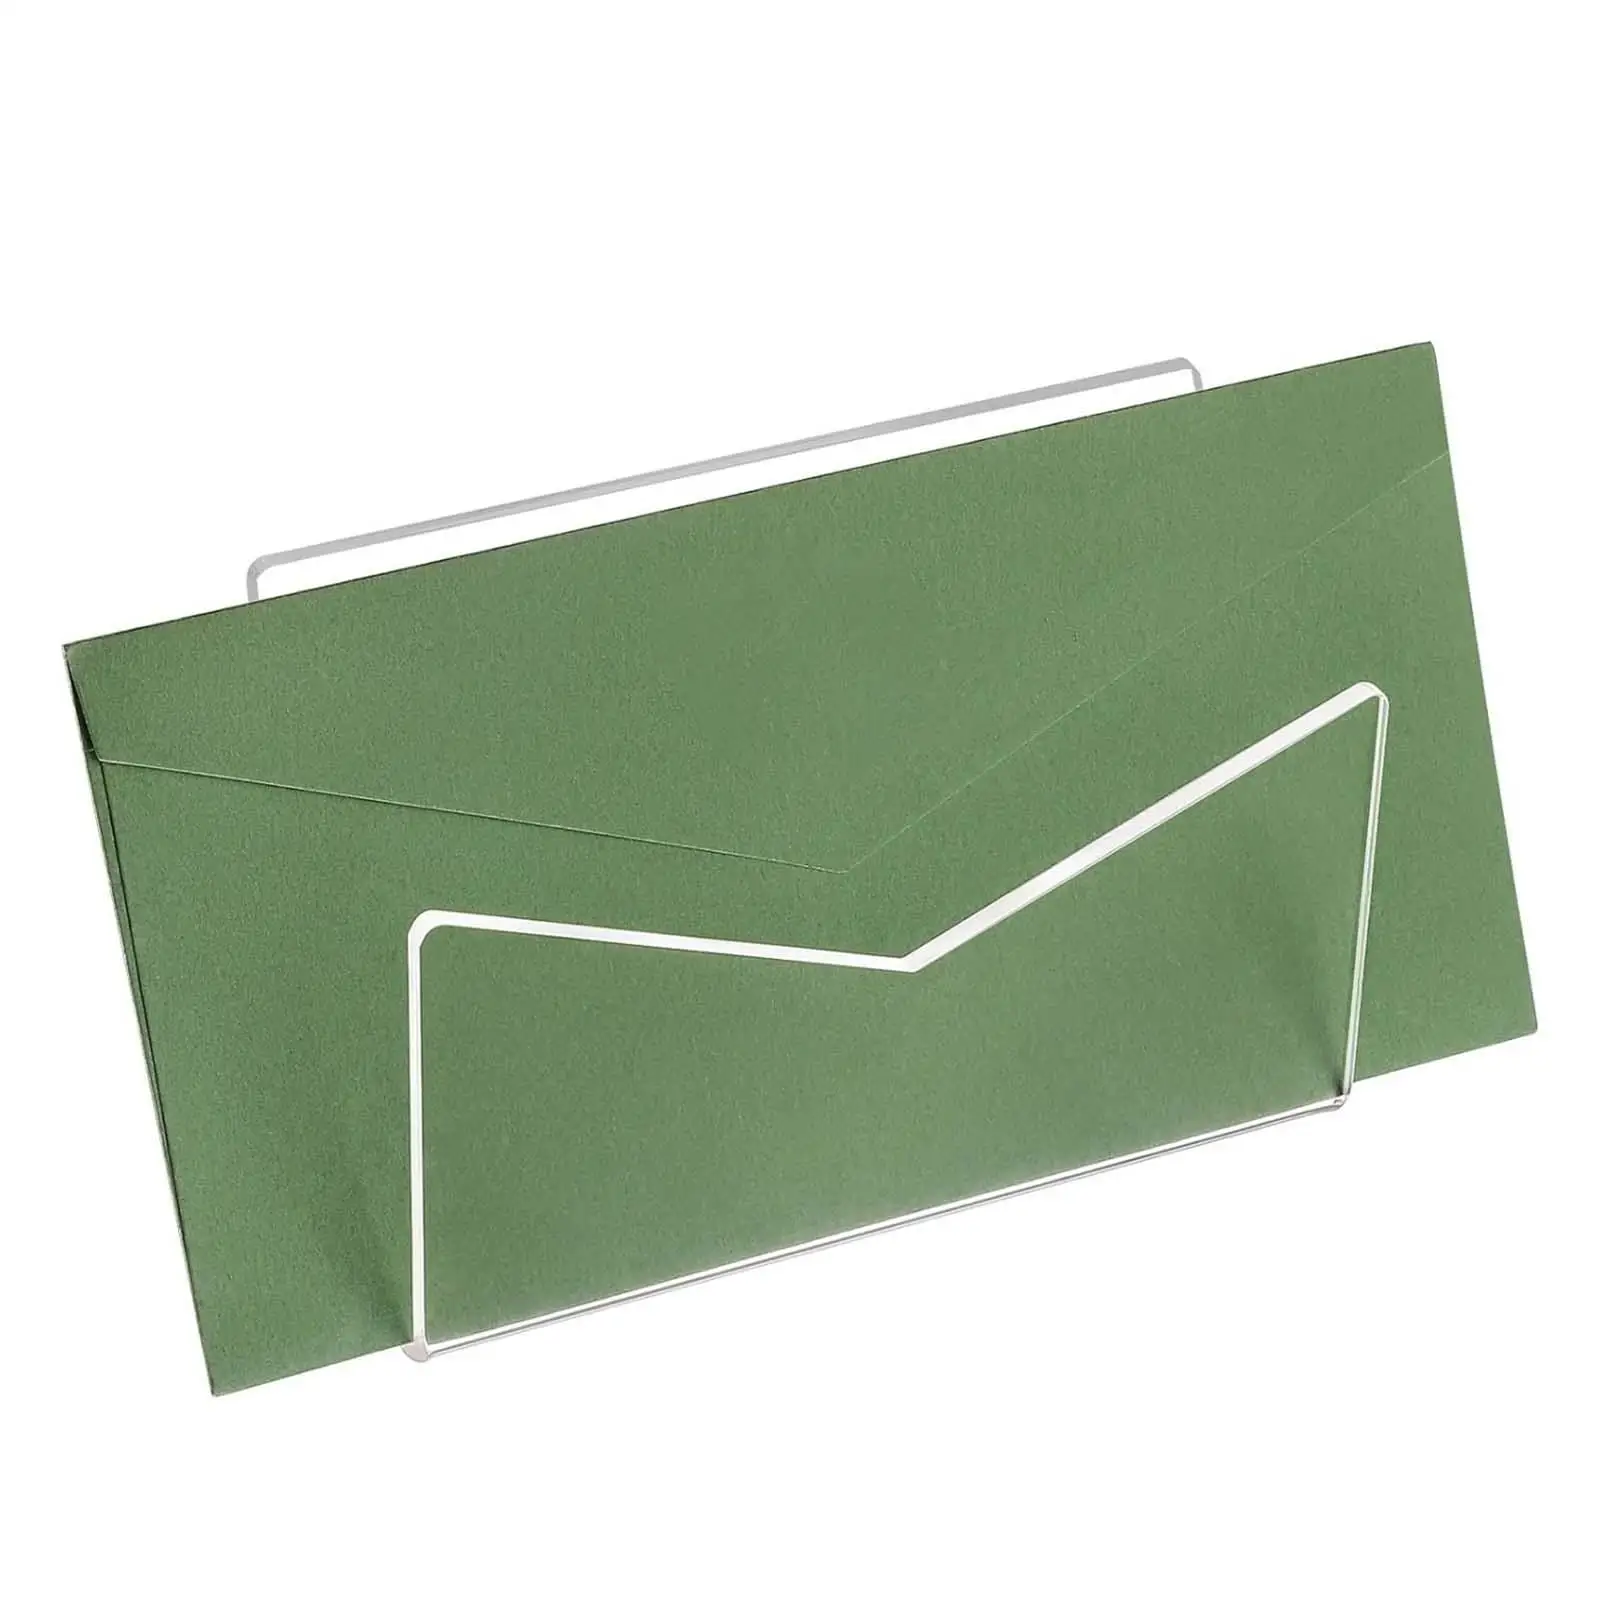 Mail Organizer Notebook Organization Filing Folder Desktop Letter Holder Letter Rack for Classroom Office Home Countertop School